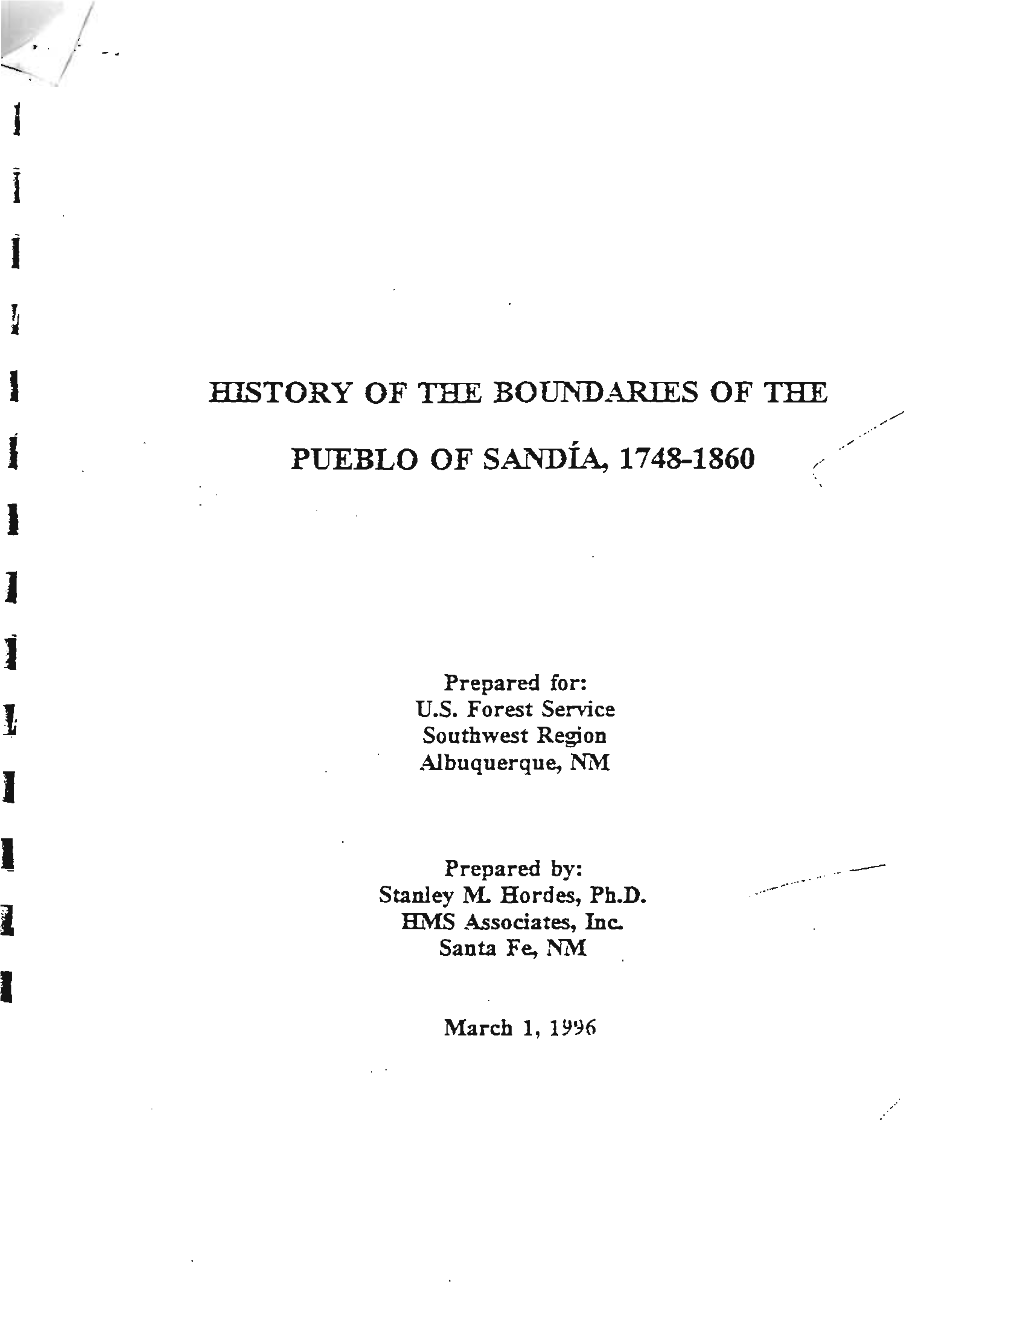 Pueblo of Sand& 174S-1860